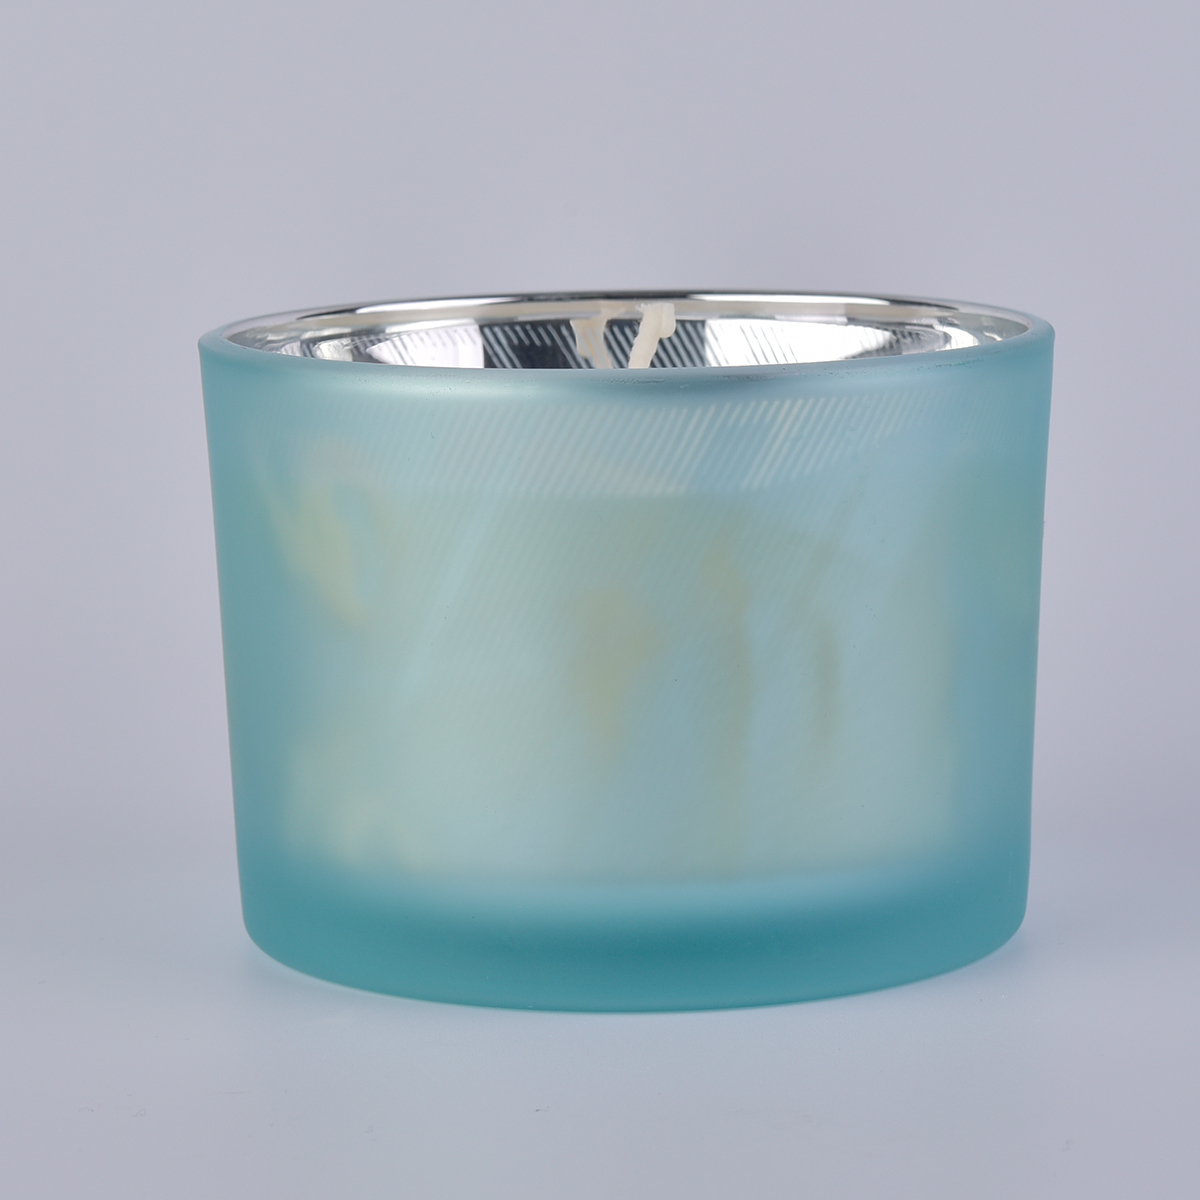 Velán de cristal azul helado con patrón láser